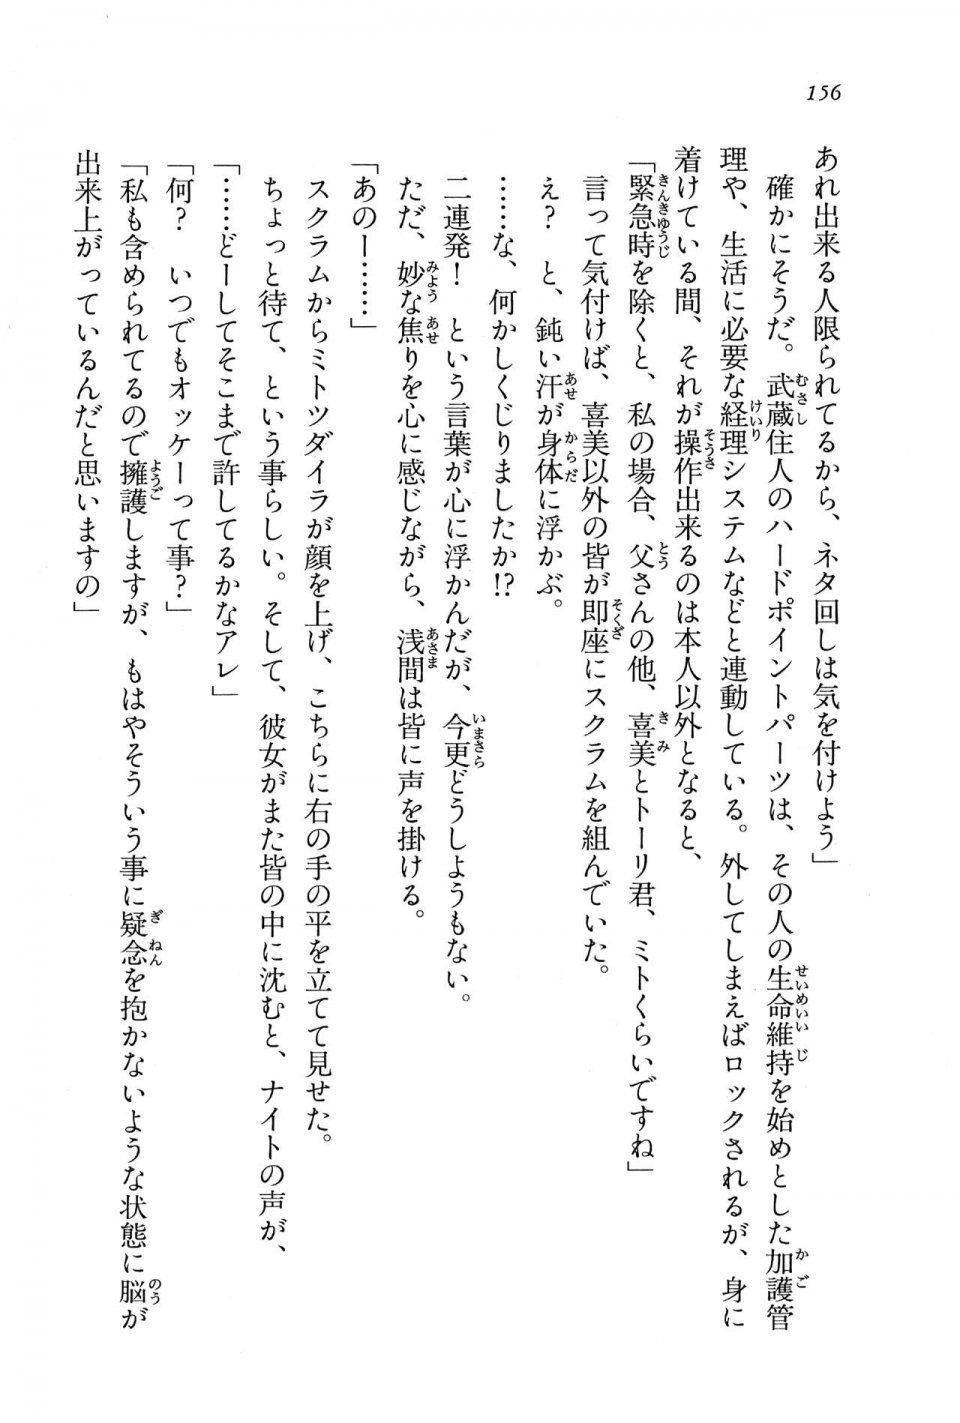 Kyoukai Senjou no Horizon BD Special Mininovel Vol 7(4A) - Photo #160